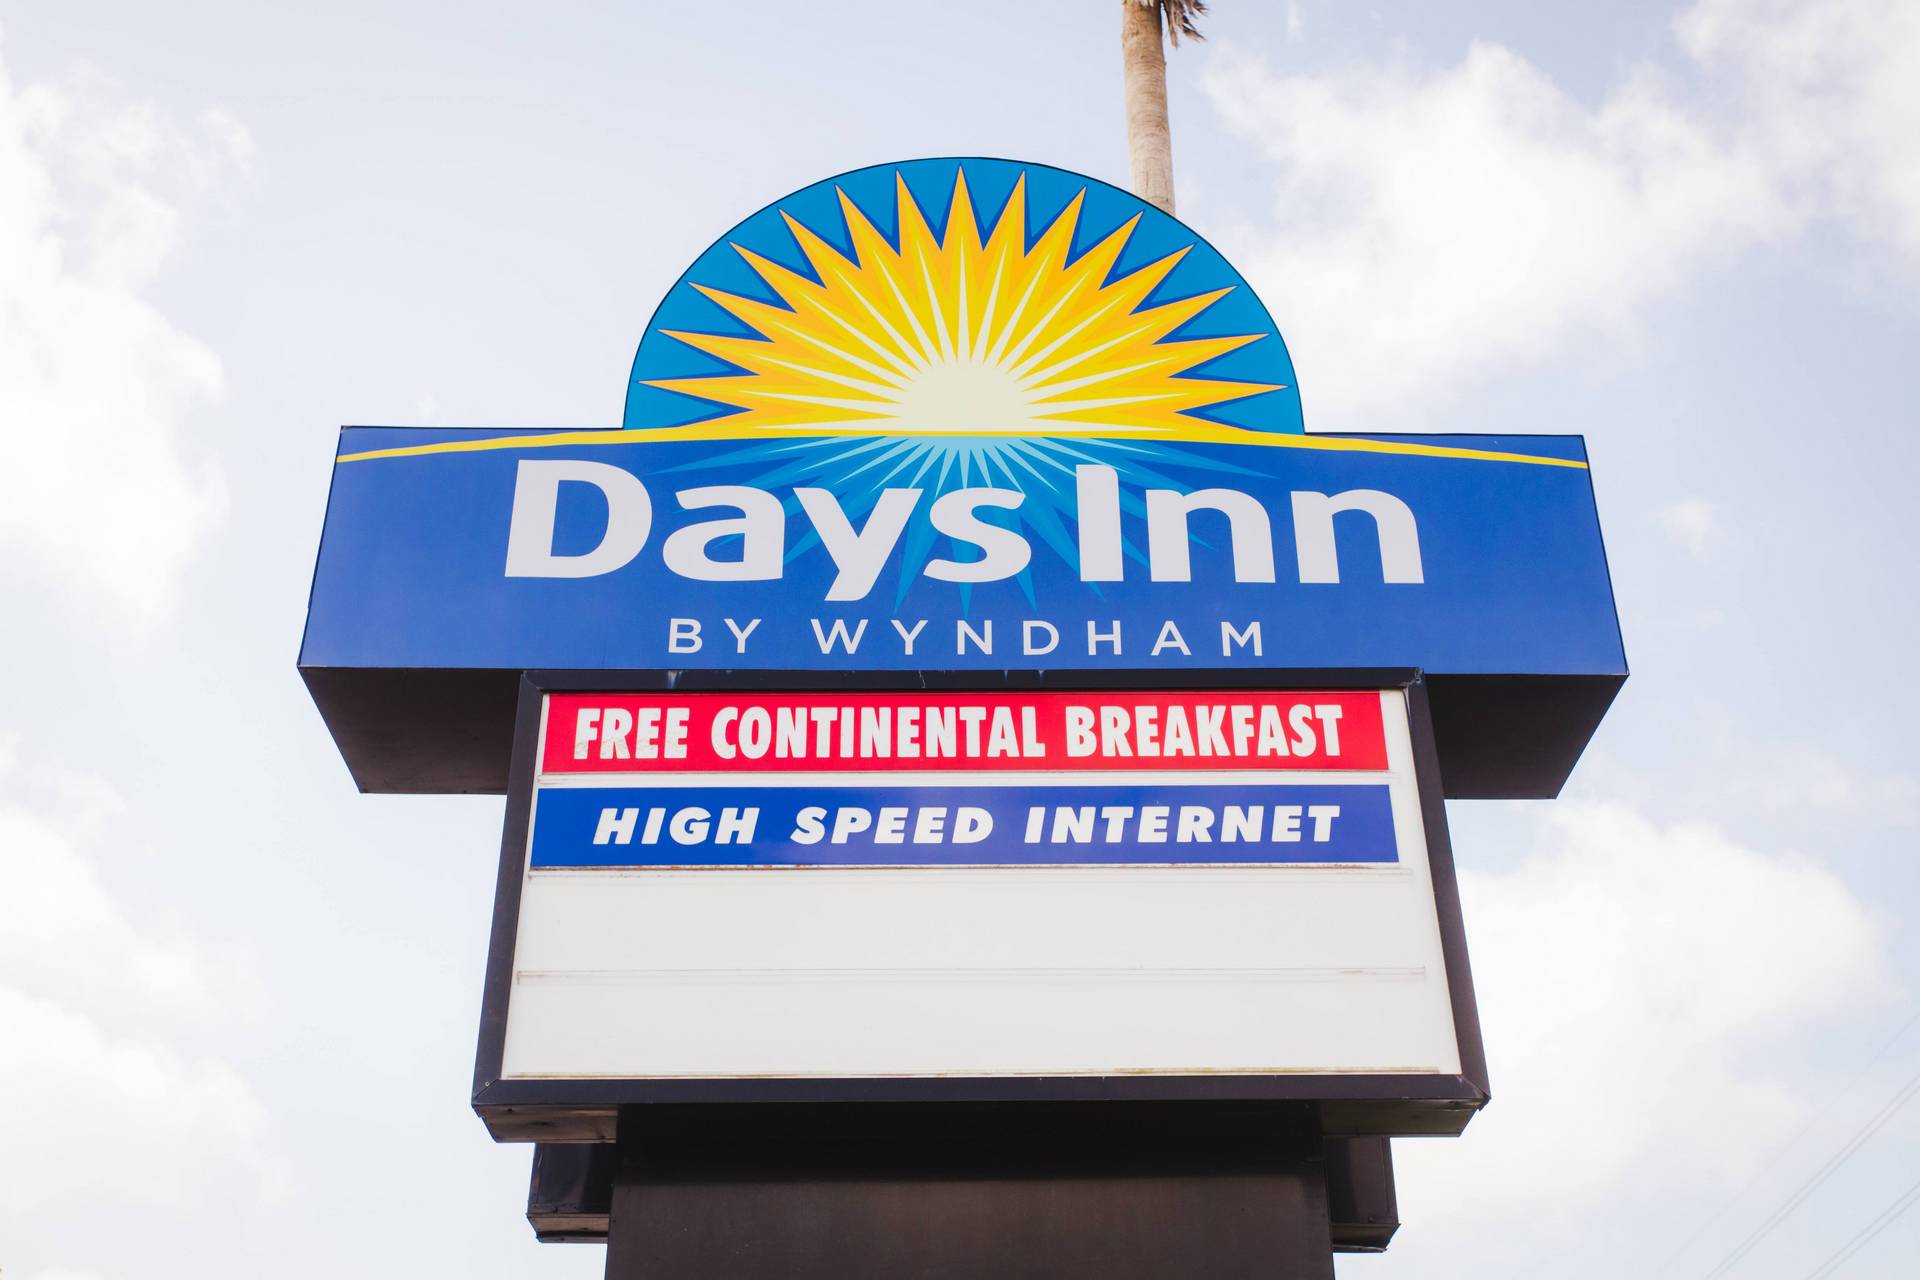 Days Inn Rosenberg Hotel Signage - Warm Welcome Awaits